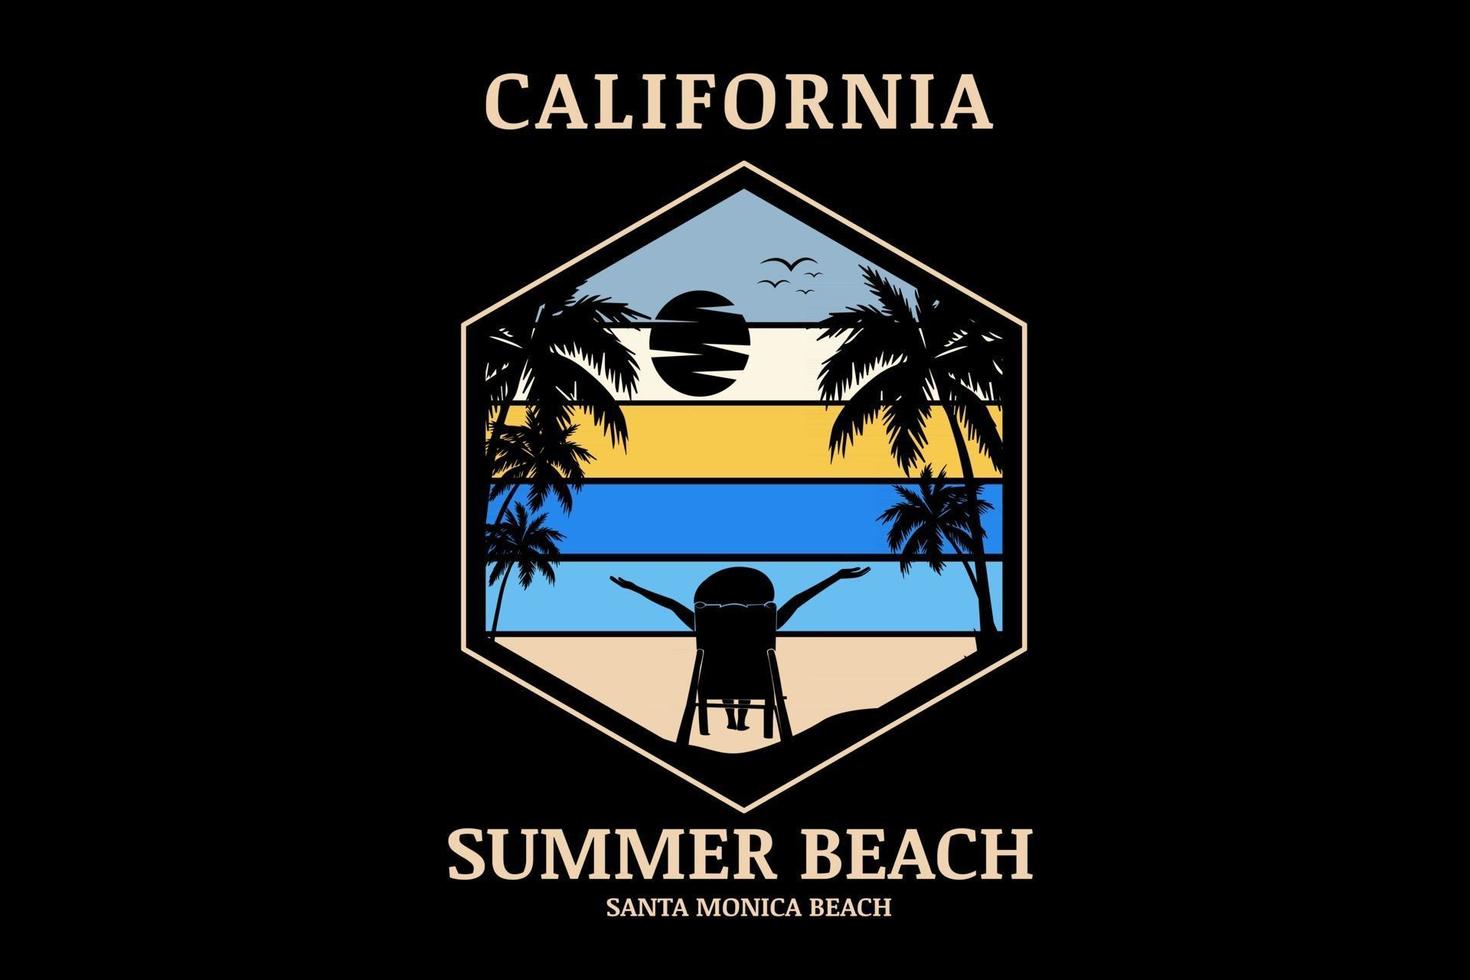 .california summer beach santa monica beach couleur bleu et crème vecteur